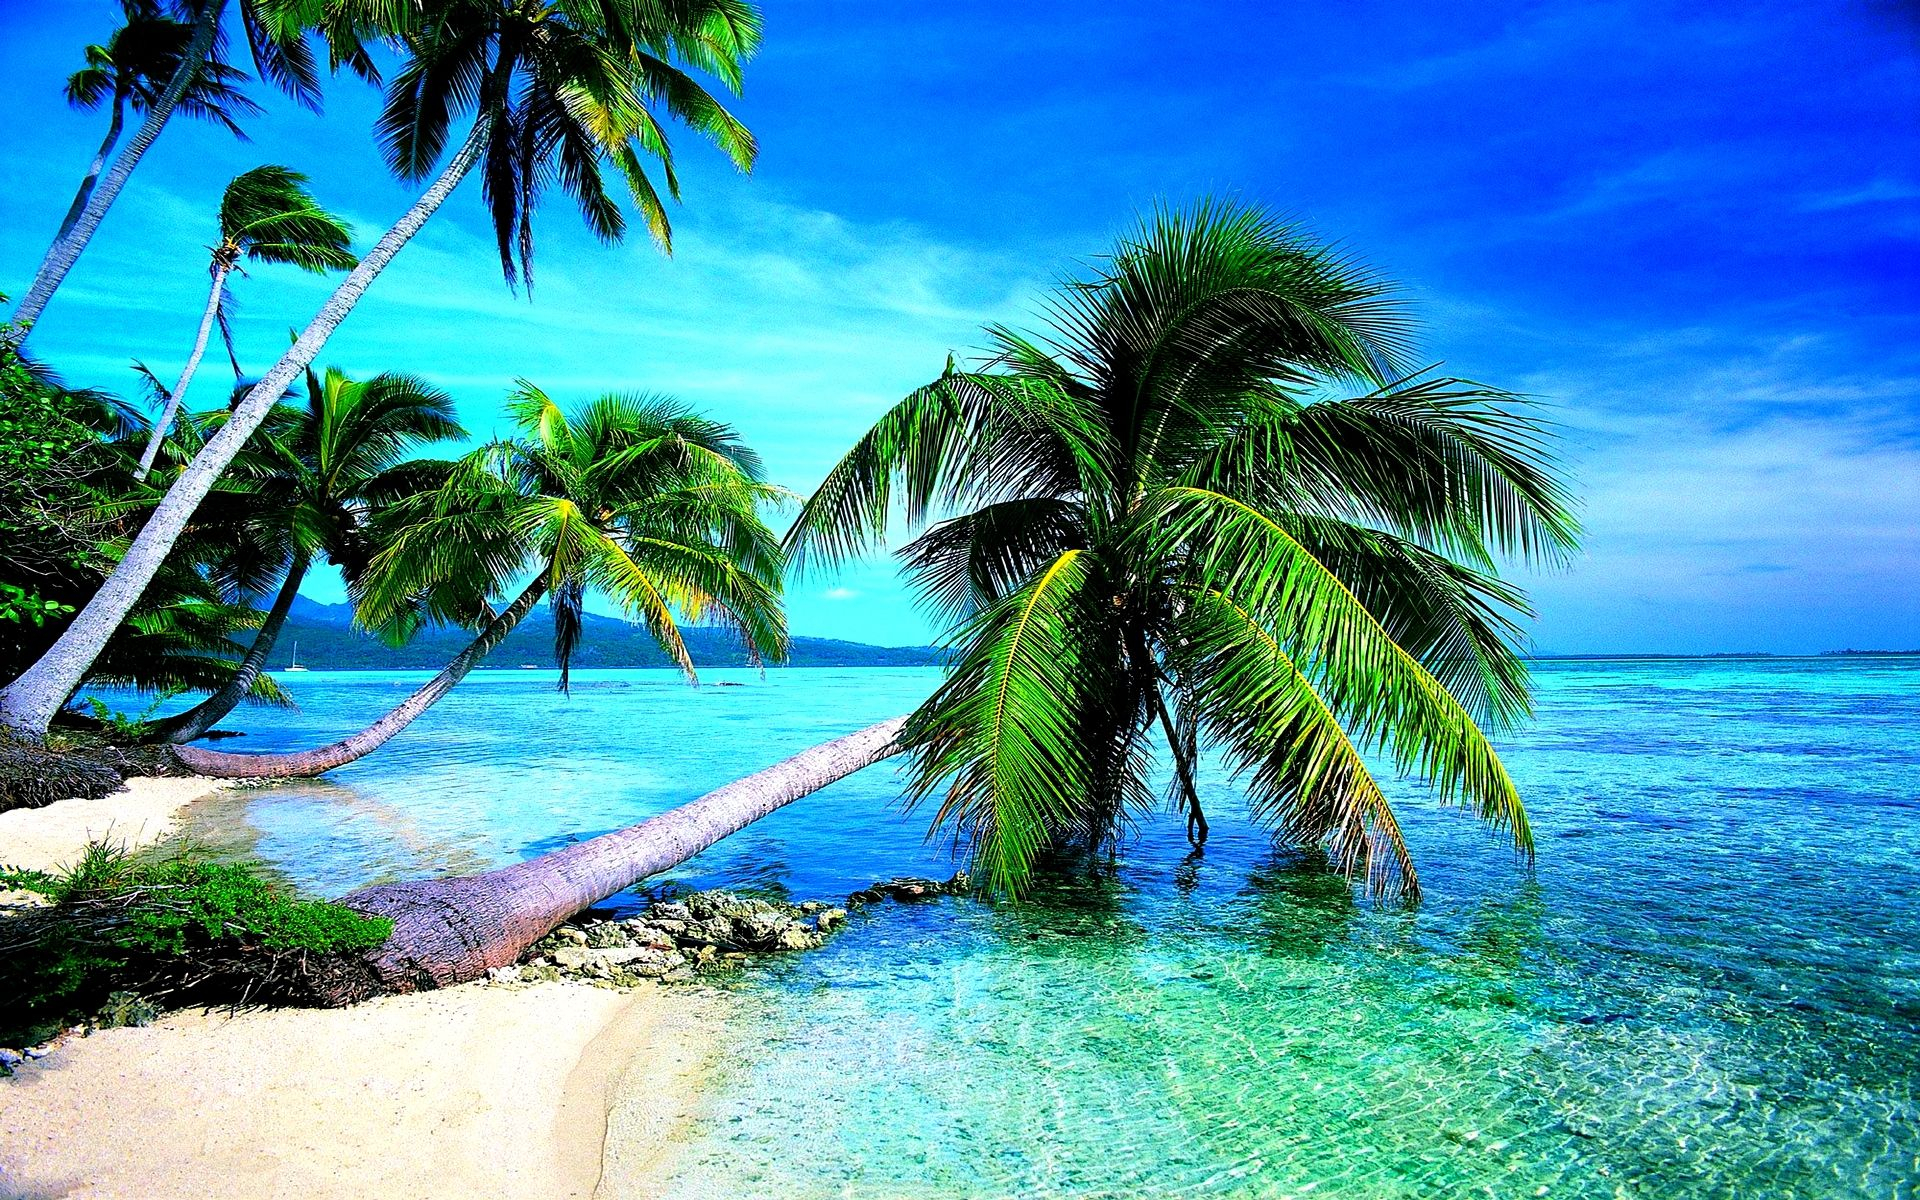 1920x1200 Australian tropical island beach paradise #paradise #beach #island # wallpaper #tropical | Beach wallpaper, Live backgrounds, Beautiful beaches